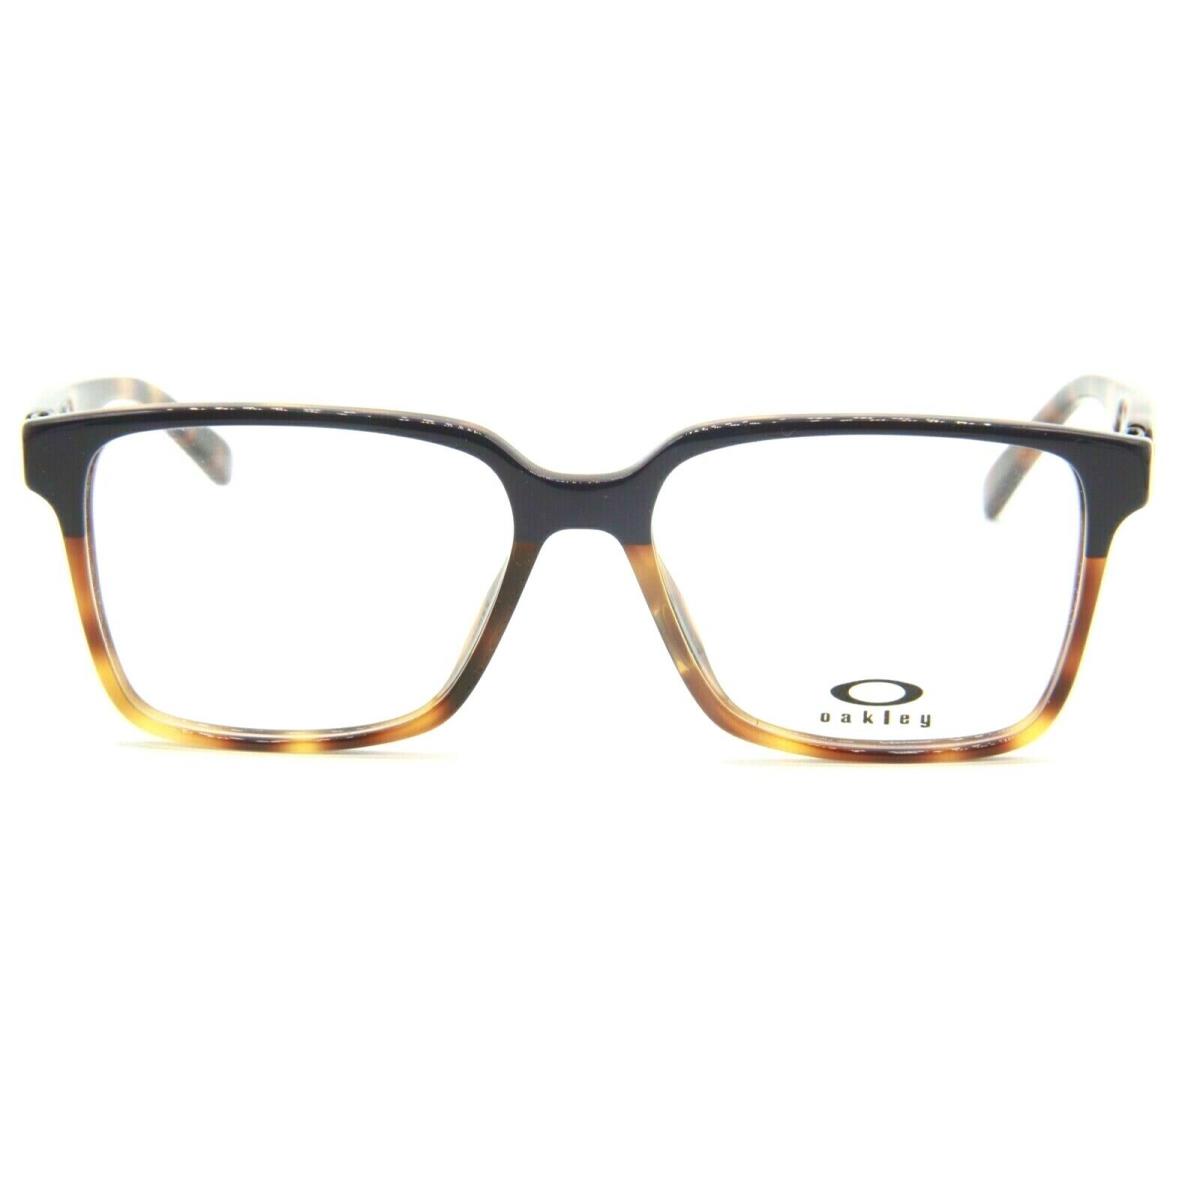 Oakley eyeglasses  - PURPLE/TORTOISE Frame